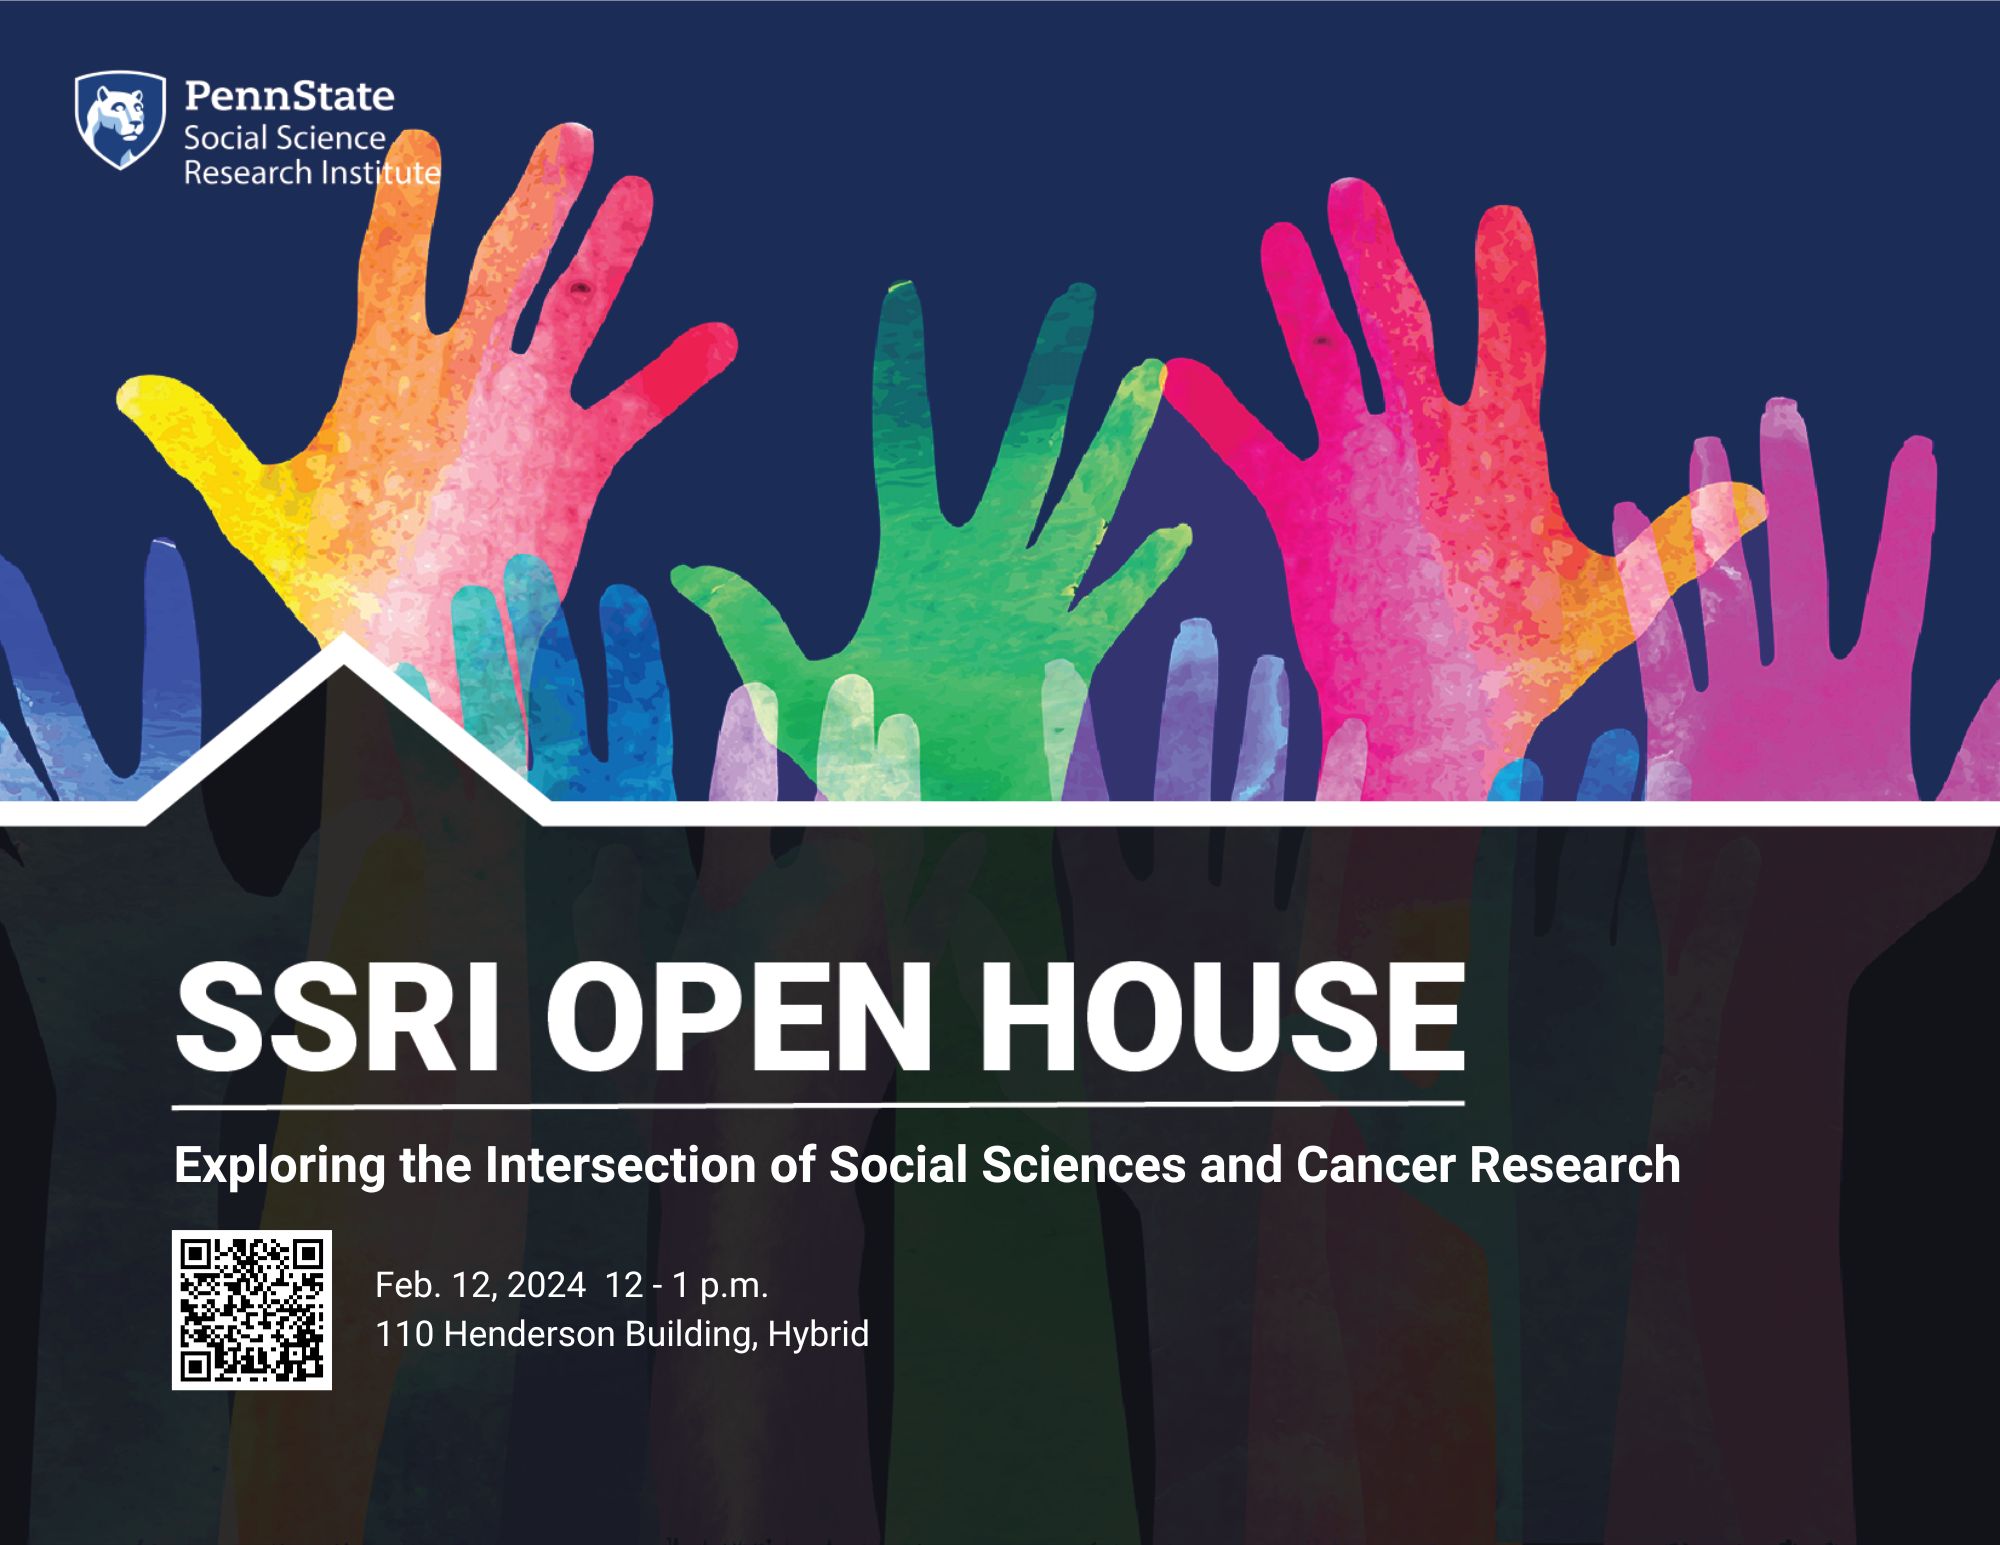 SSRI Open house - Feb. 12